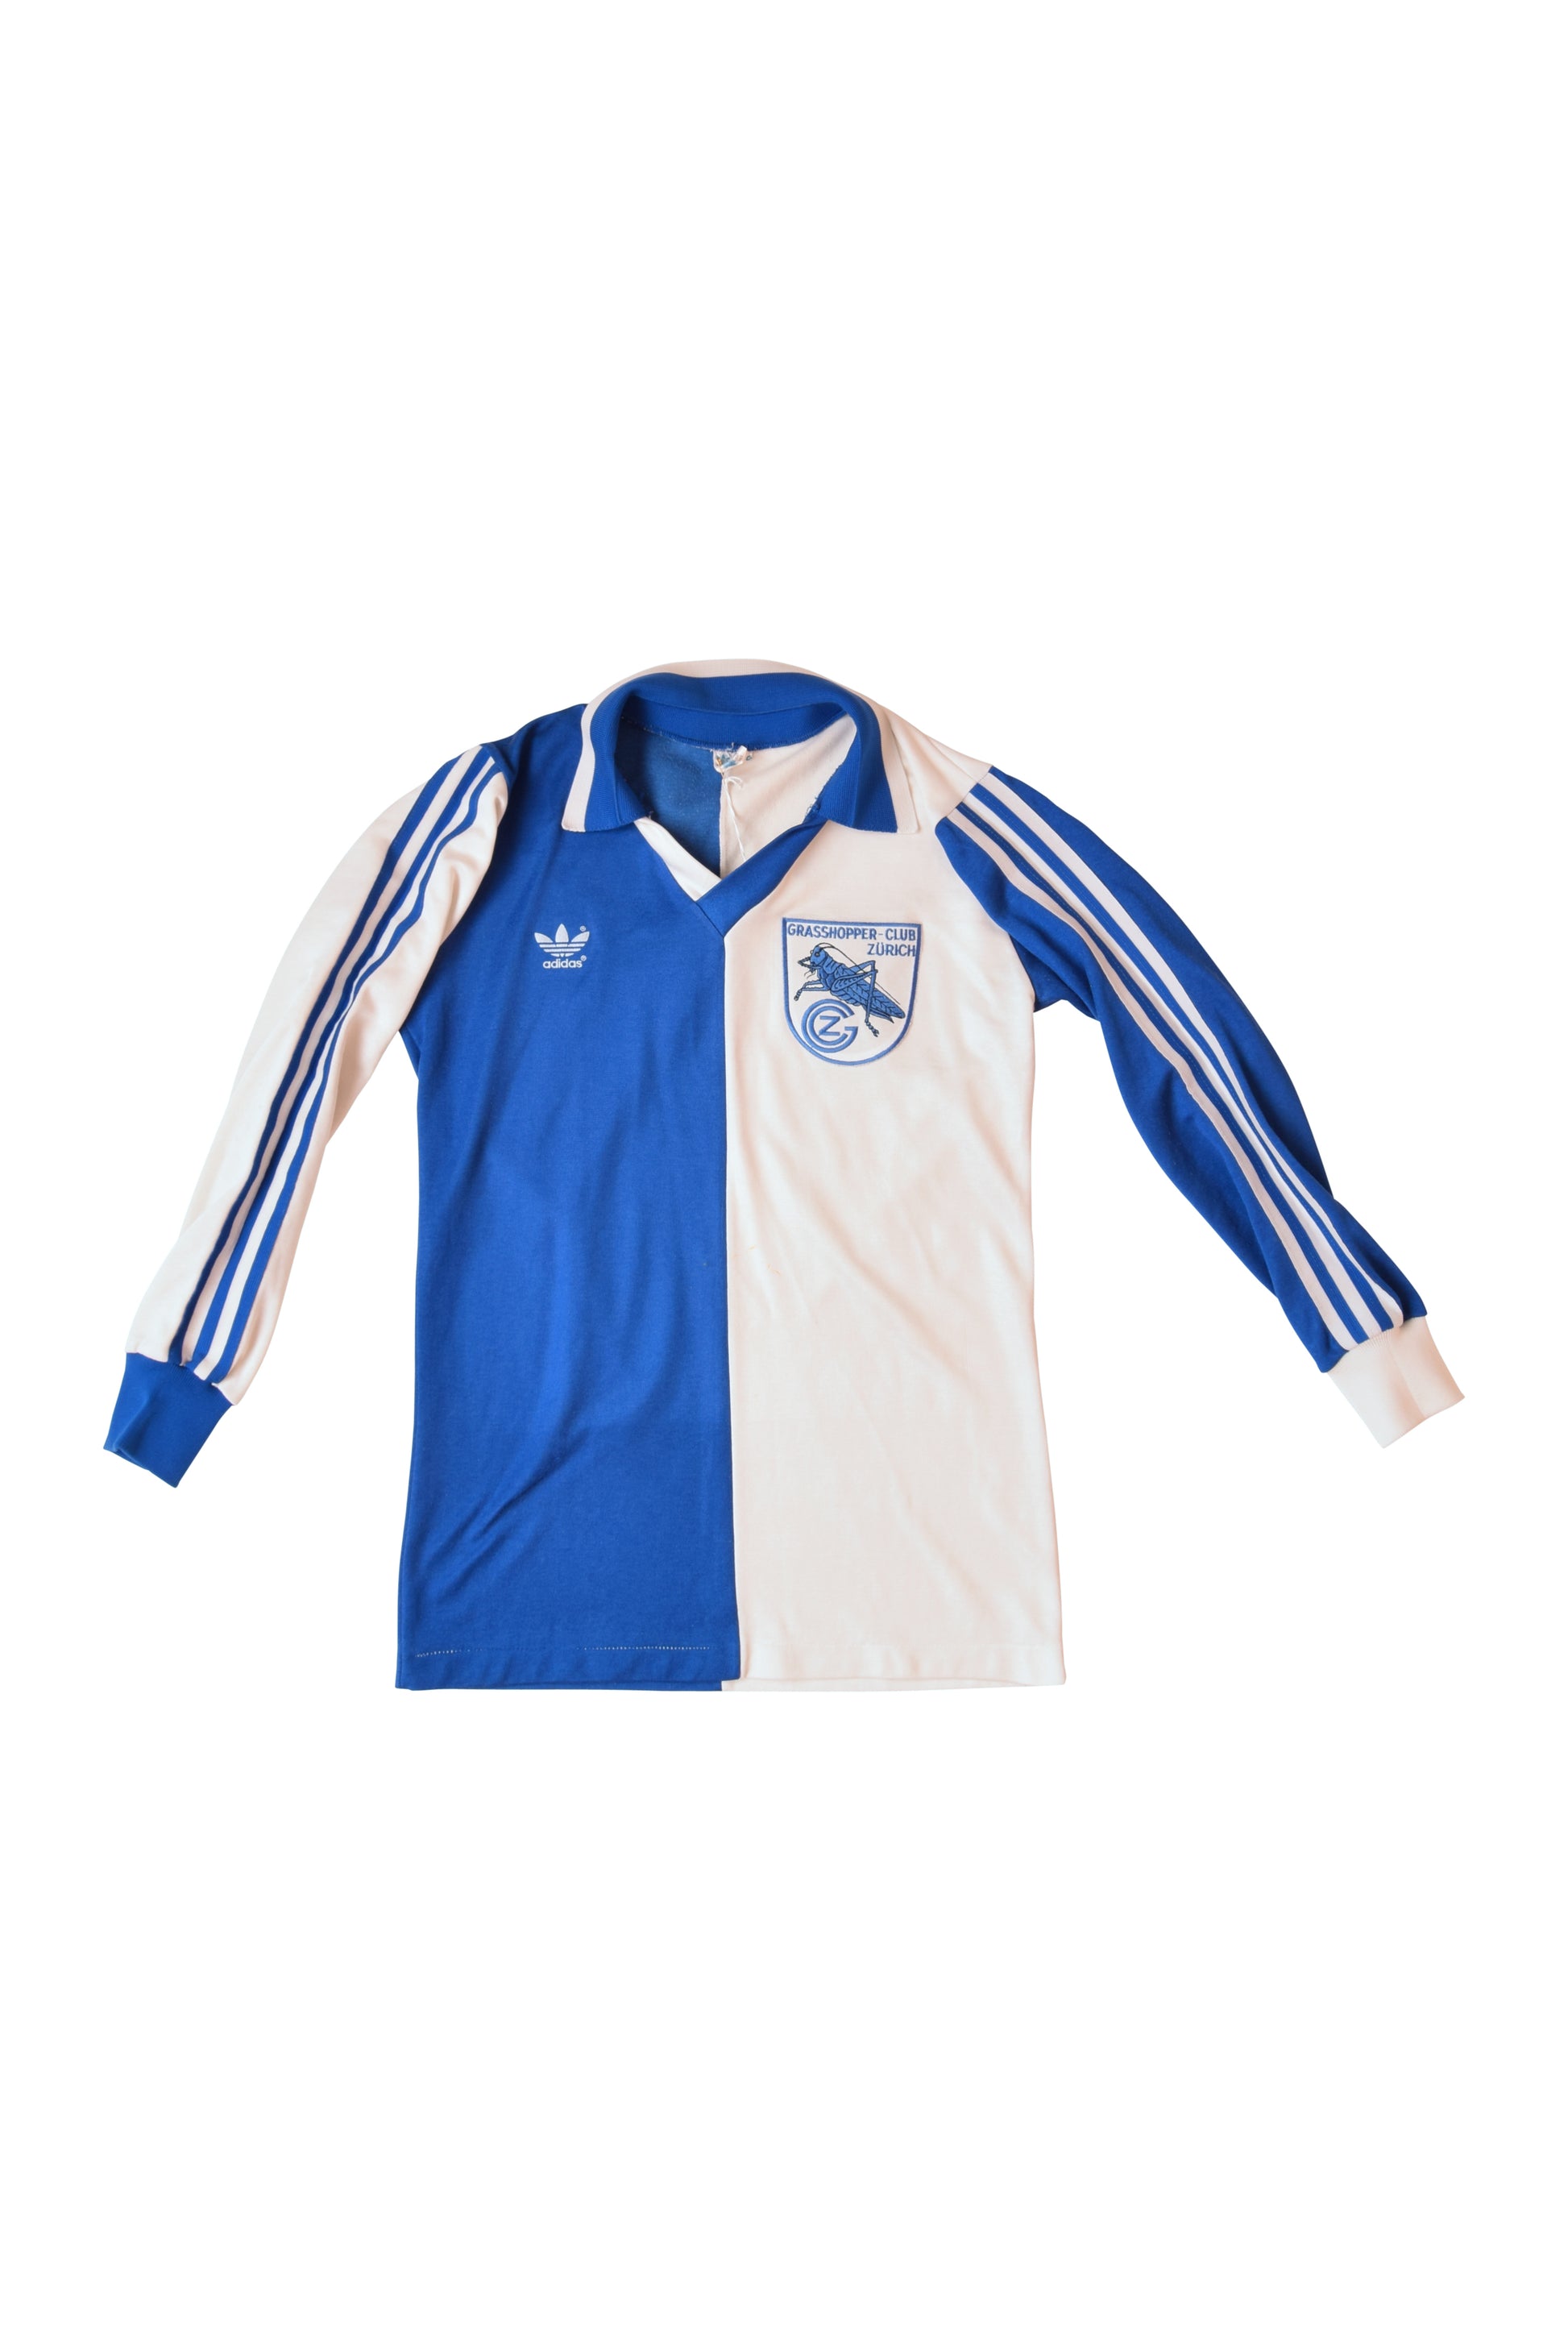 Vintage Grasshoppers Zurich Adidas Home Football Shirt 1981-1984 